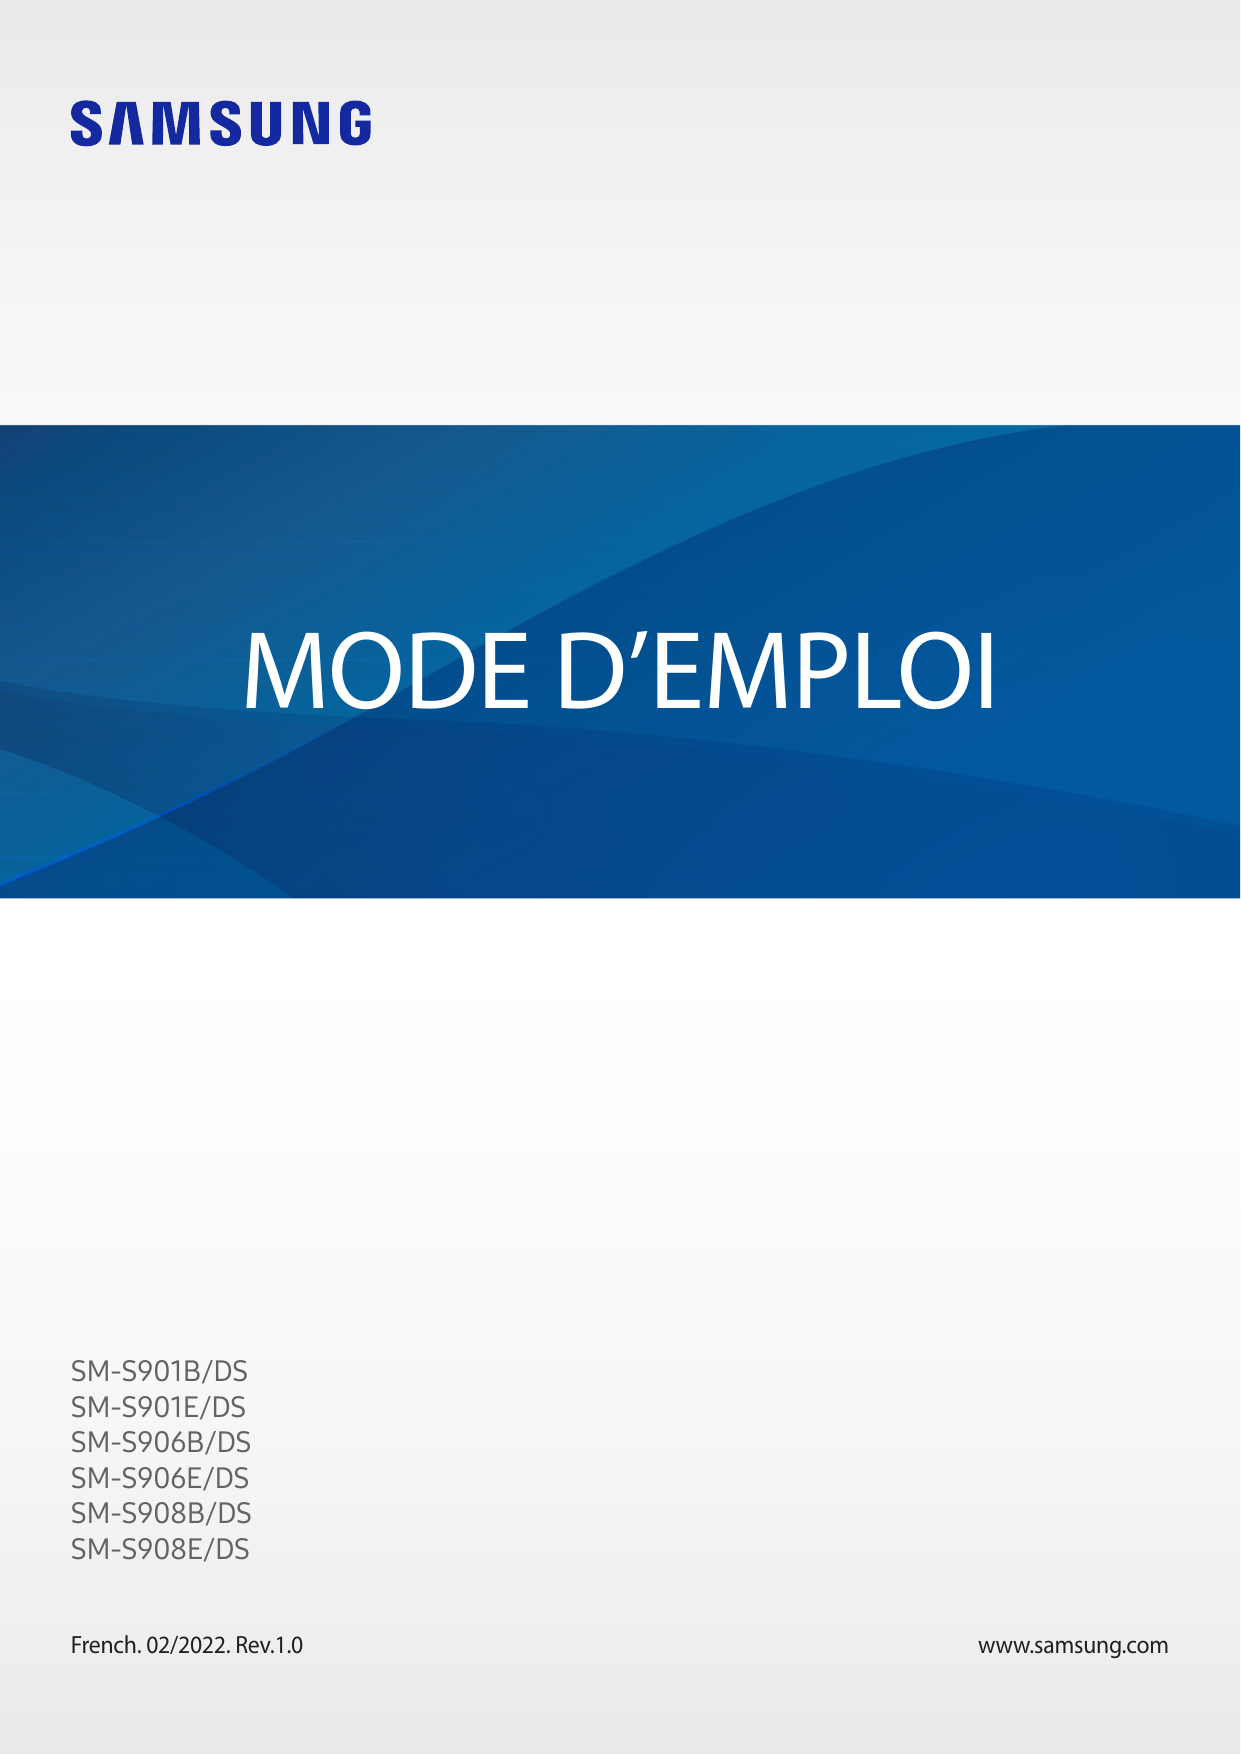 MODE D’EMPLOISM-S901B/DSSM-S901E/DSSM-S906B/DSSM-S906E/DSSM-S908B/DSSM-S908E/DSFrench. 02/2022. Rev.1.0www.samsung.com